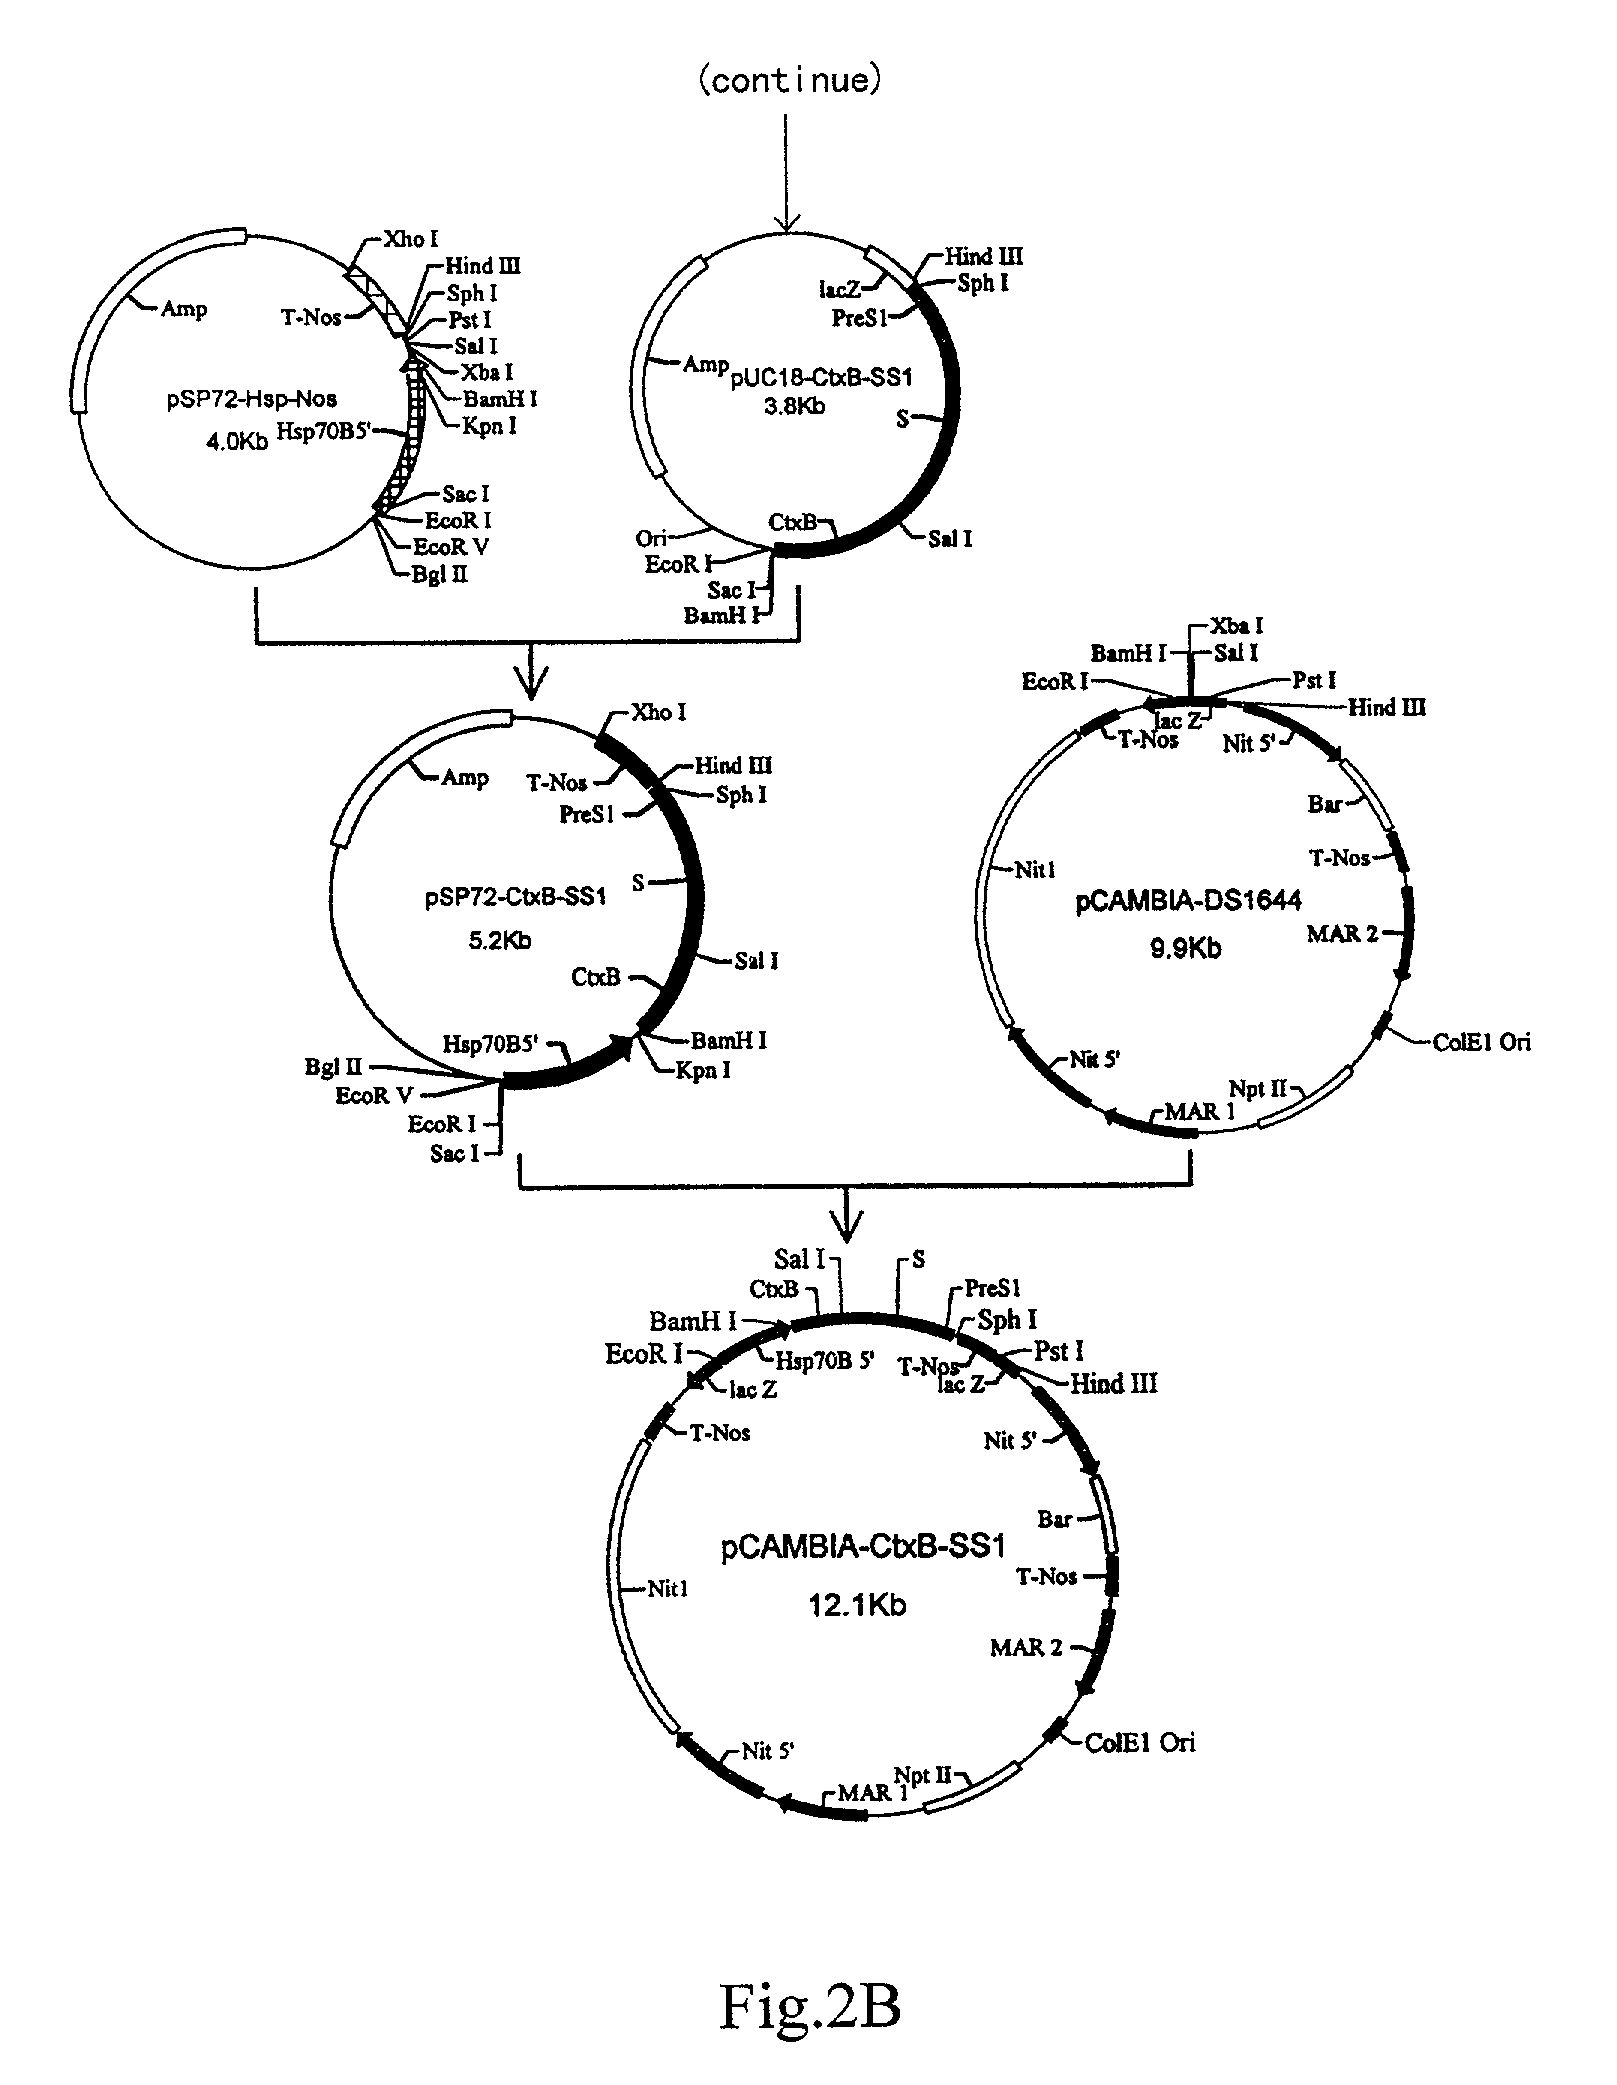 Transgenic dunaliella salina as a bioreactor